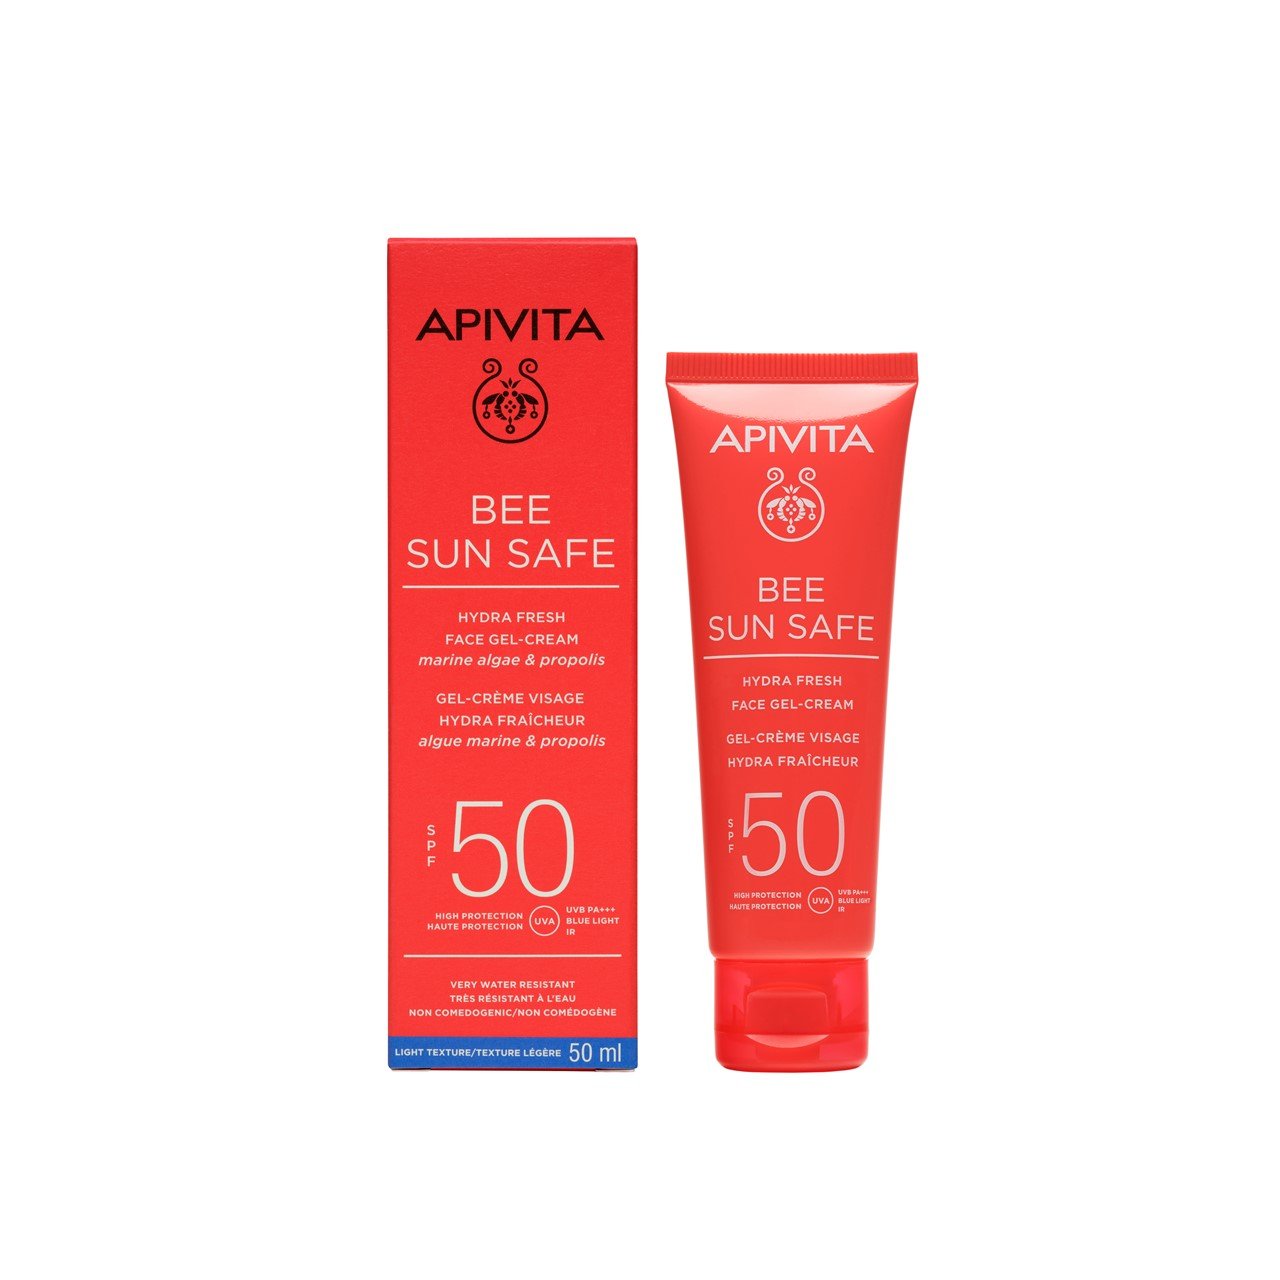 APIVITA Bee Sun Safe Hydra Fresh Face Gel-Cream SPF50 50ml (1.69floz)